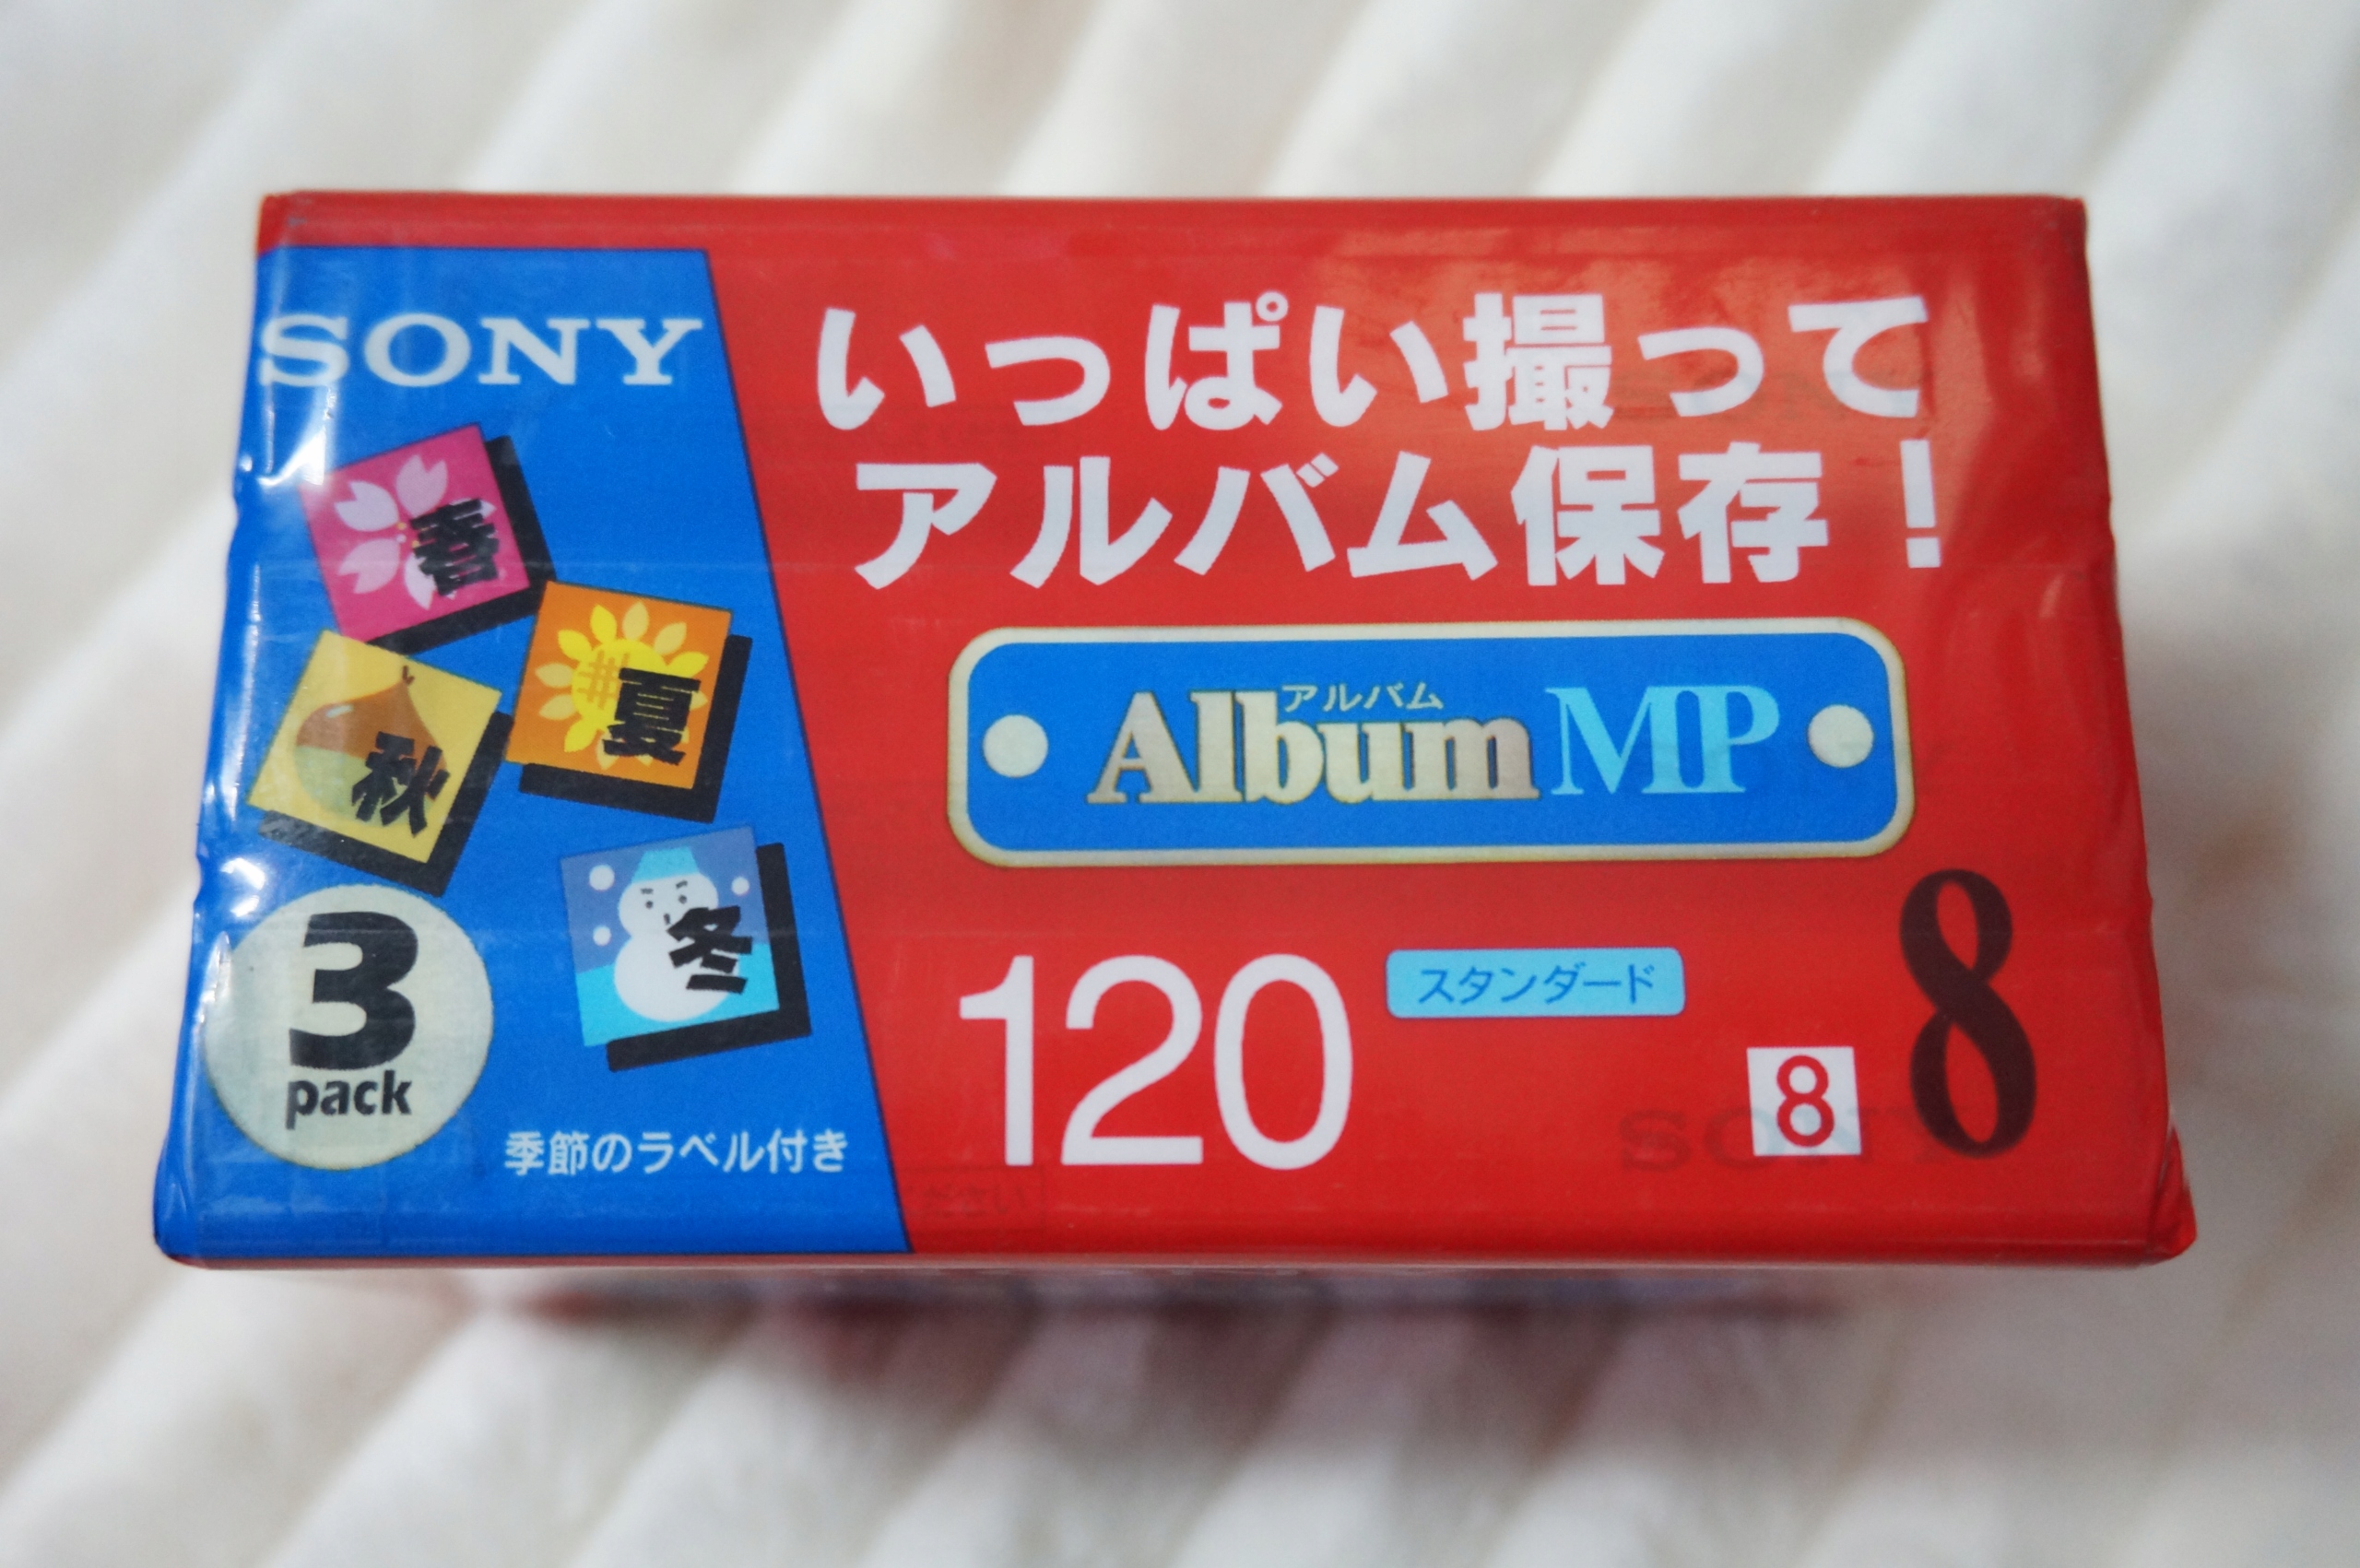 3x KAZETY VIDEO8 SONY ALBUM MP 3-pack 120min